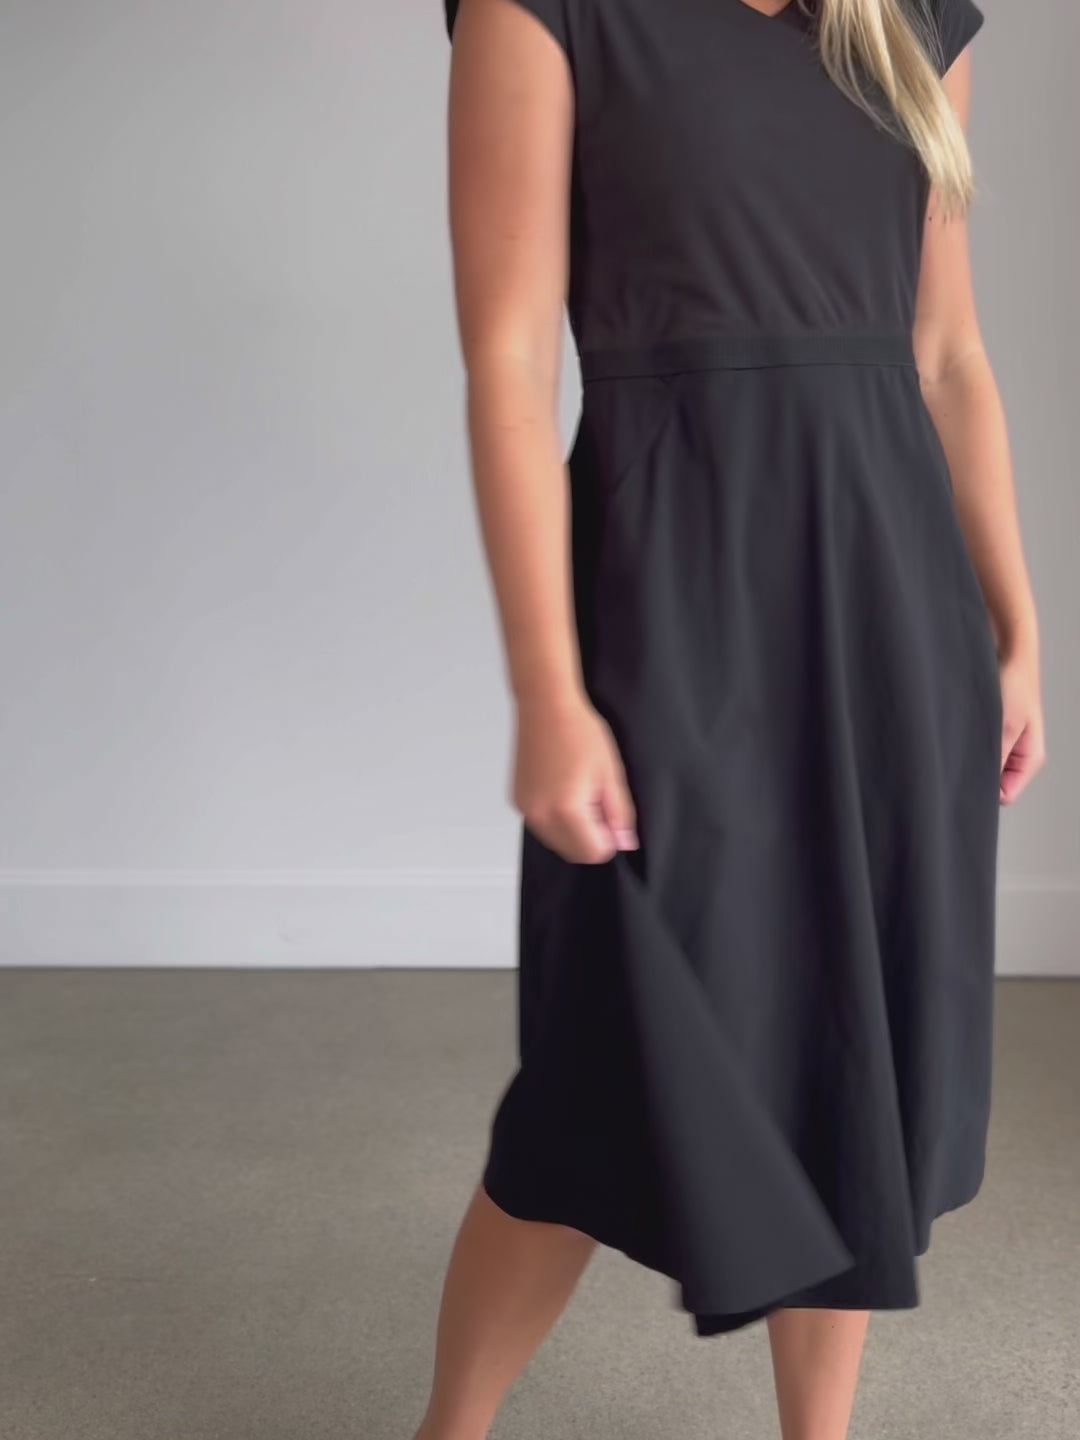 Kate Cap Sleeve Black Midi Dress